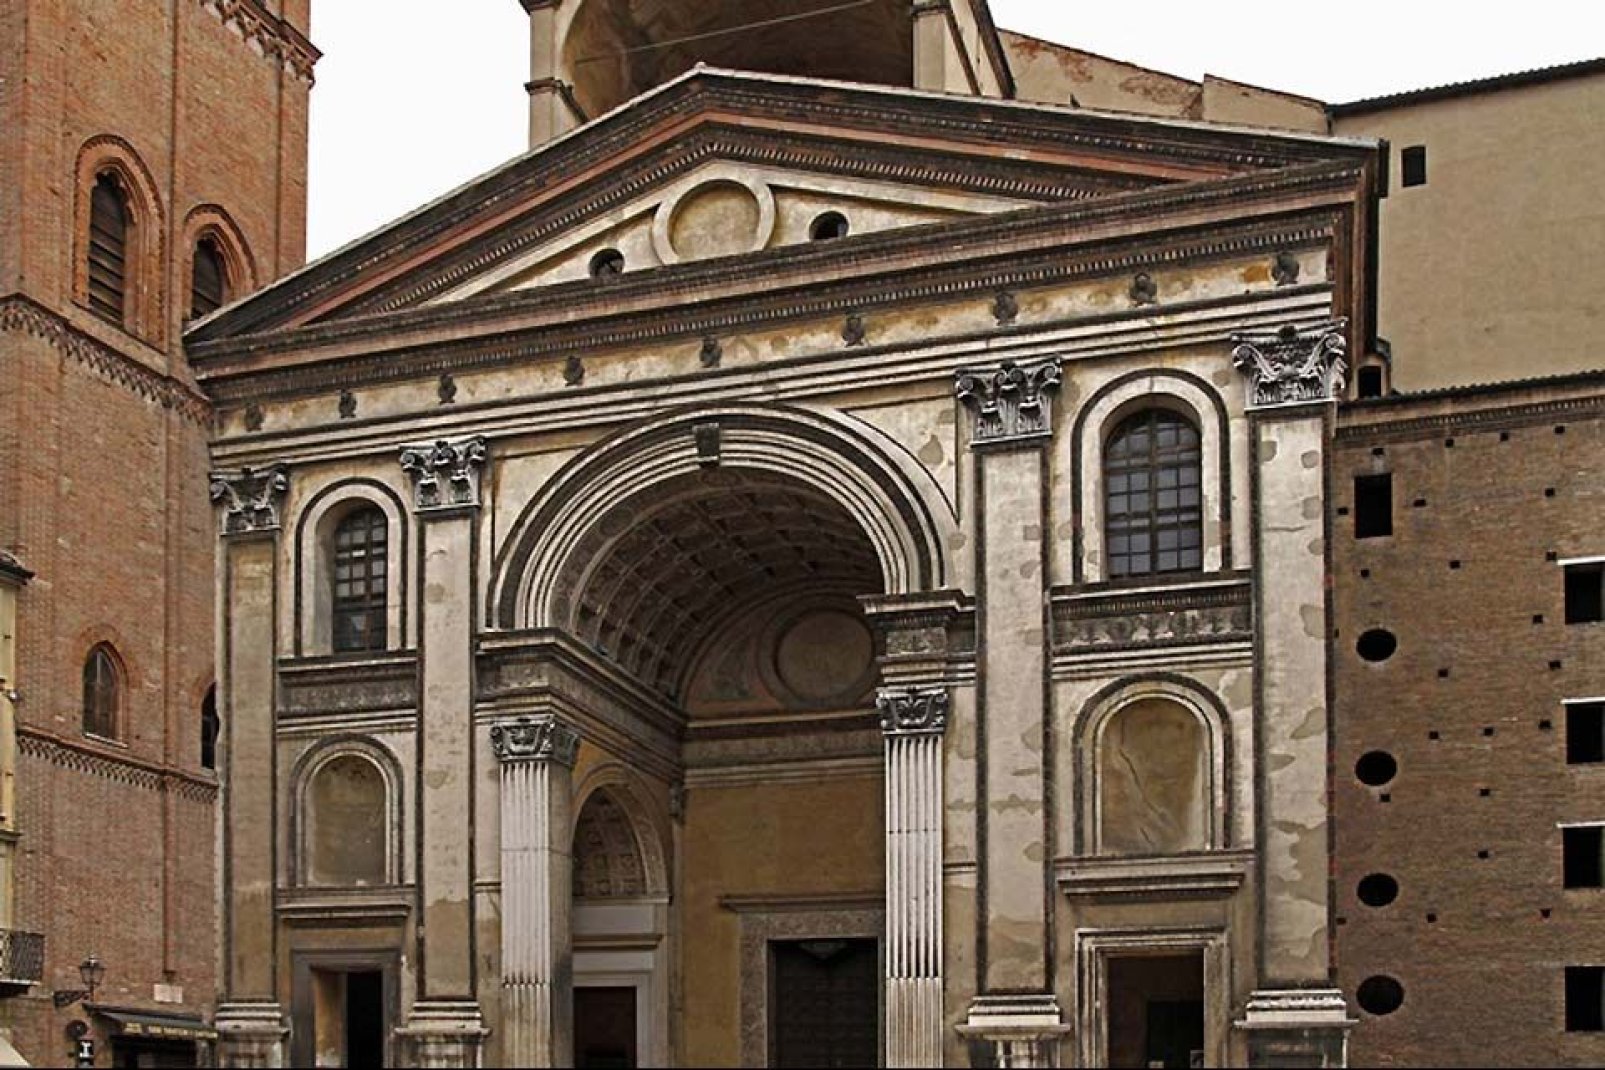 La basílica co-catedral de San Andrés es la iglesia más grande de Mantua: es una obra de Gian Battista Alberti.